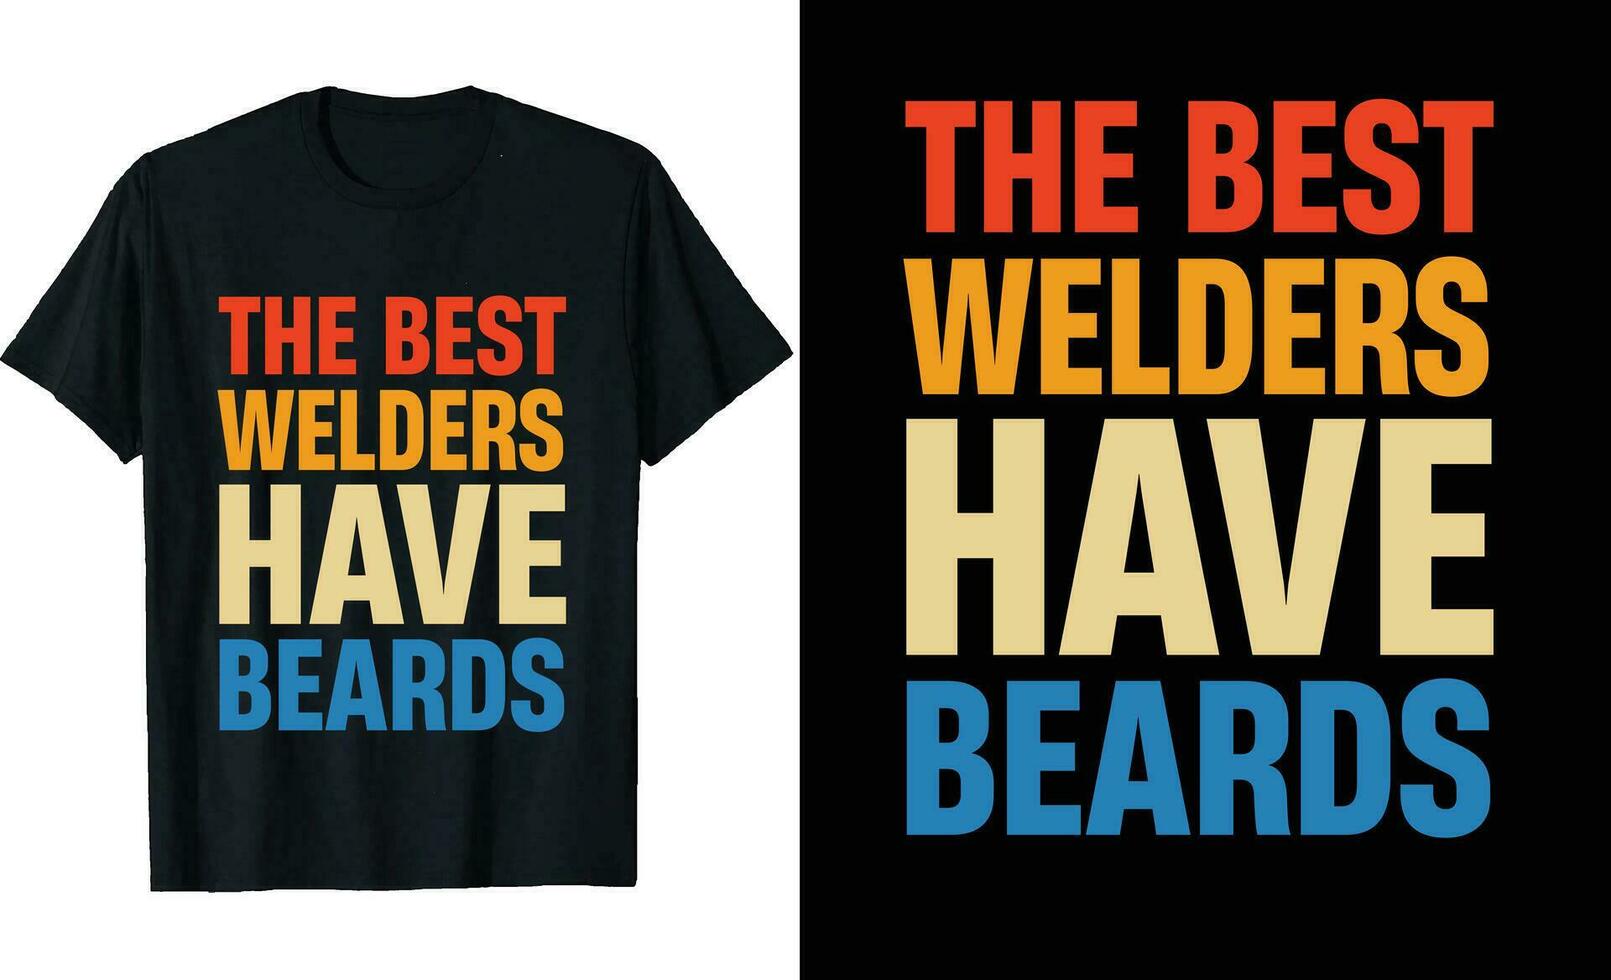 Best Welders Have Beards Funny Welders Long Sleeve T-Shirt or Welders t shirt design or Beards t-shirt design vector